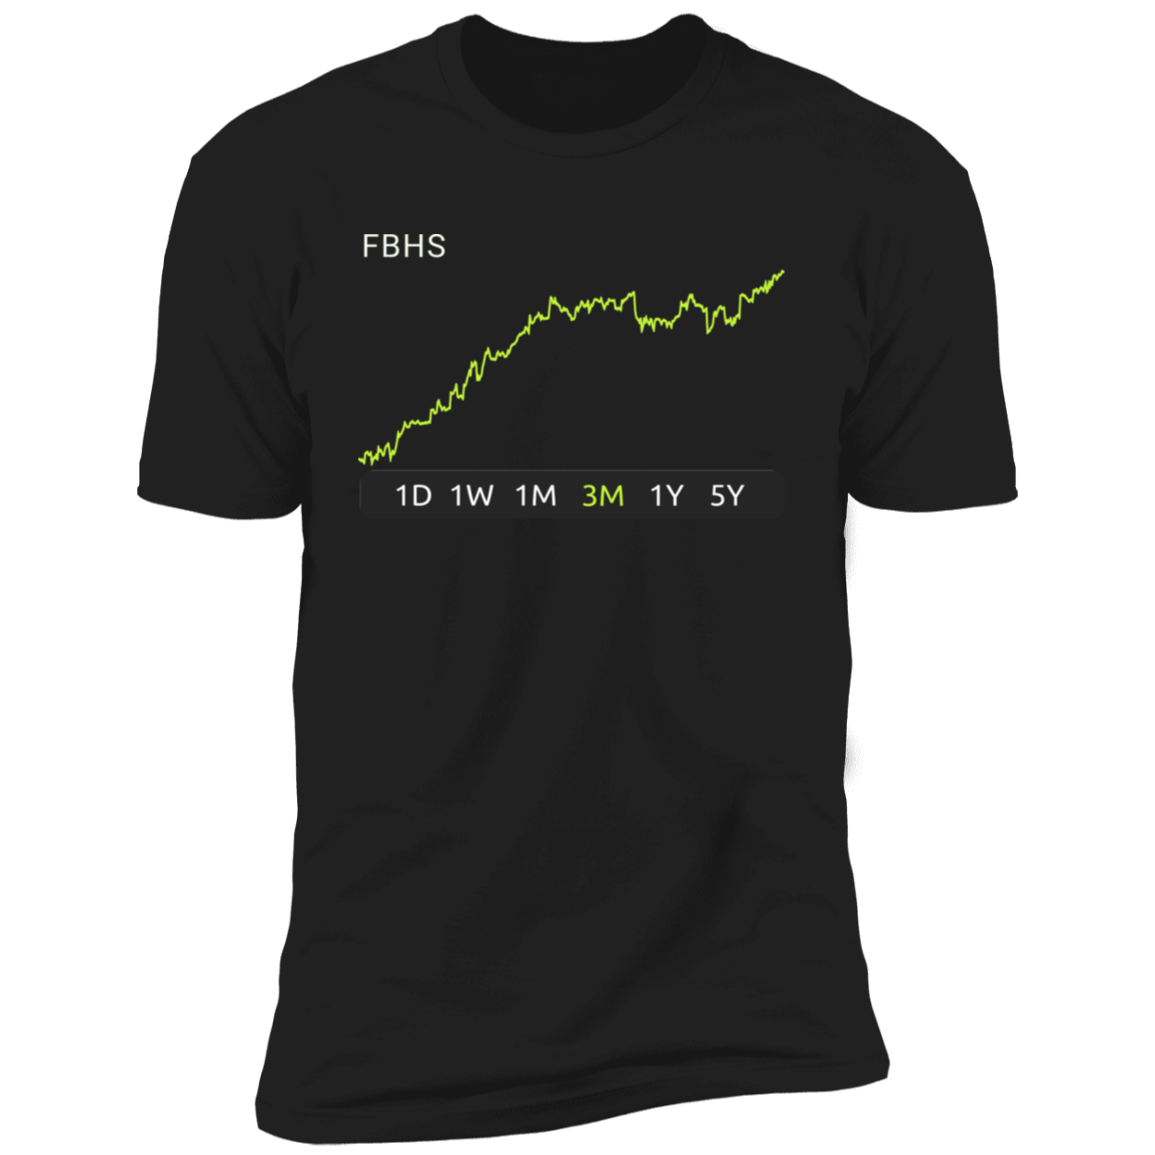 FBHS Stock 3m Premium T-Shirt